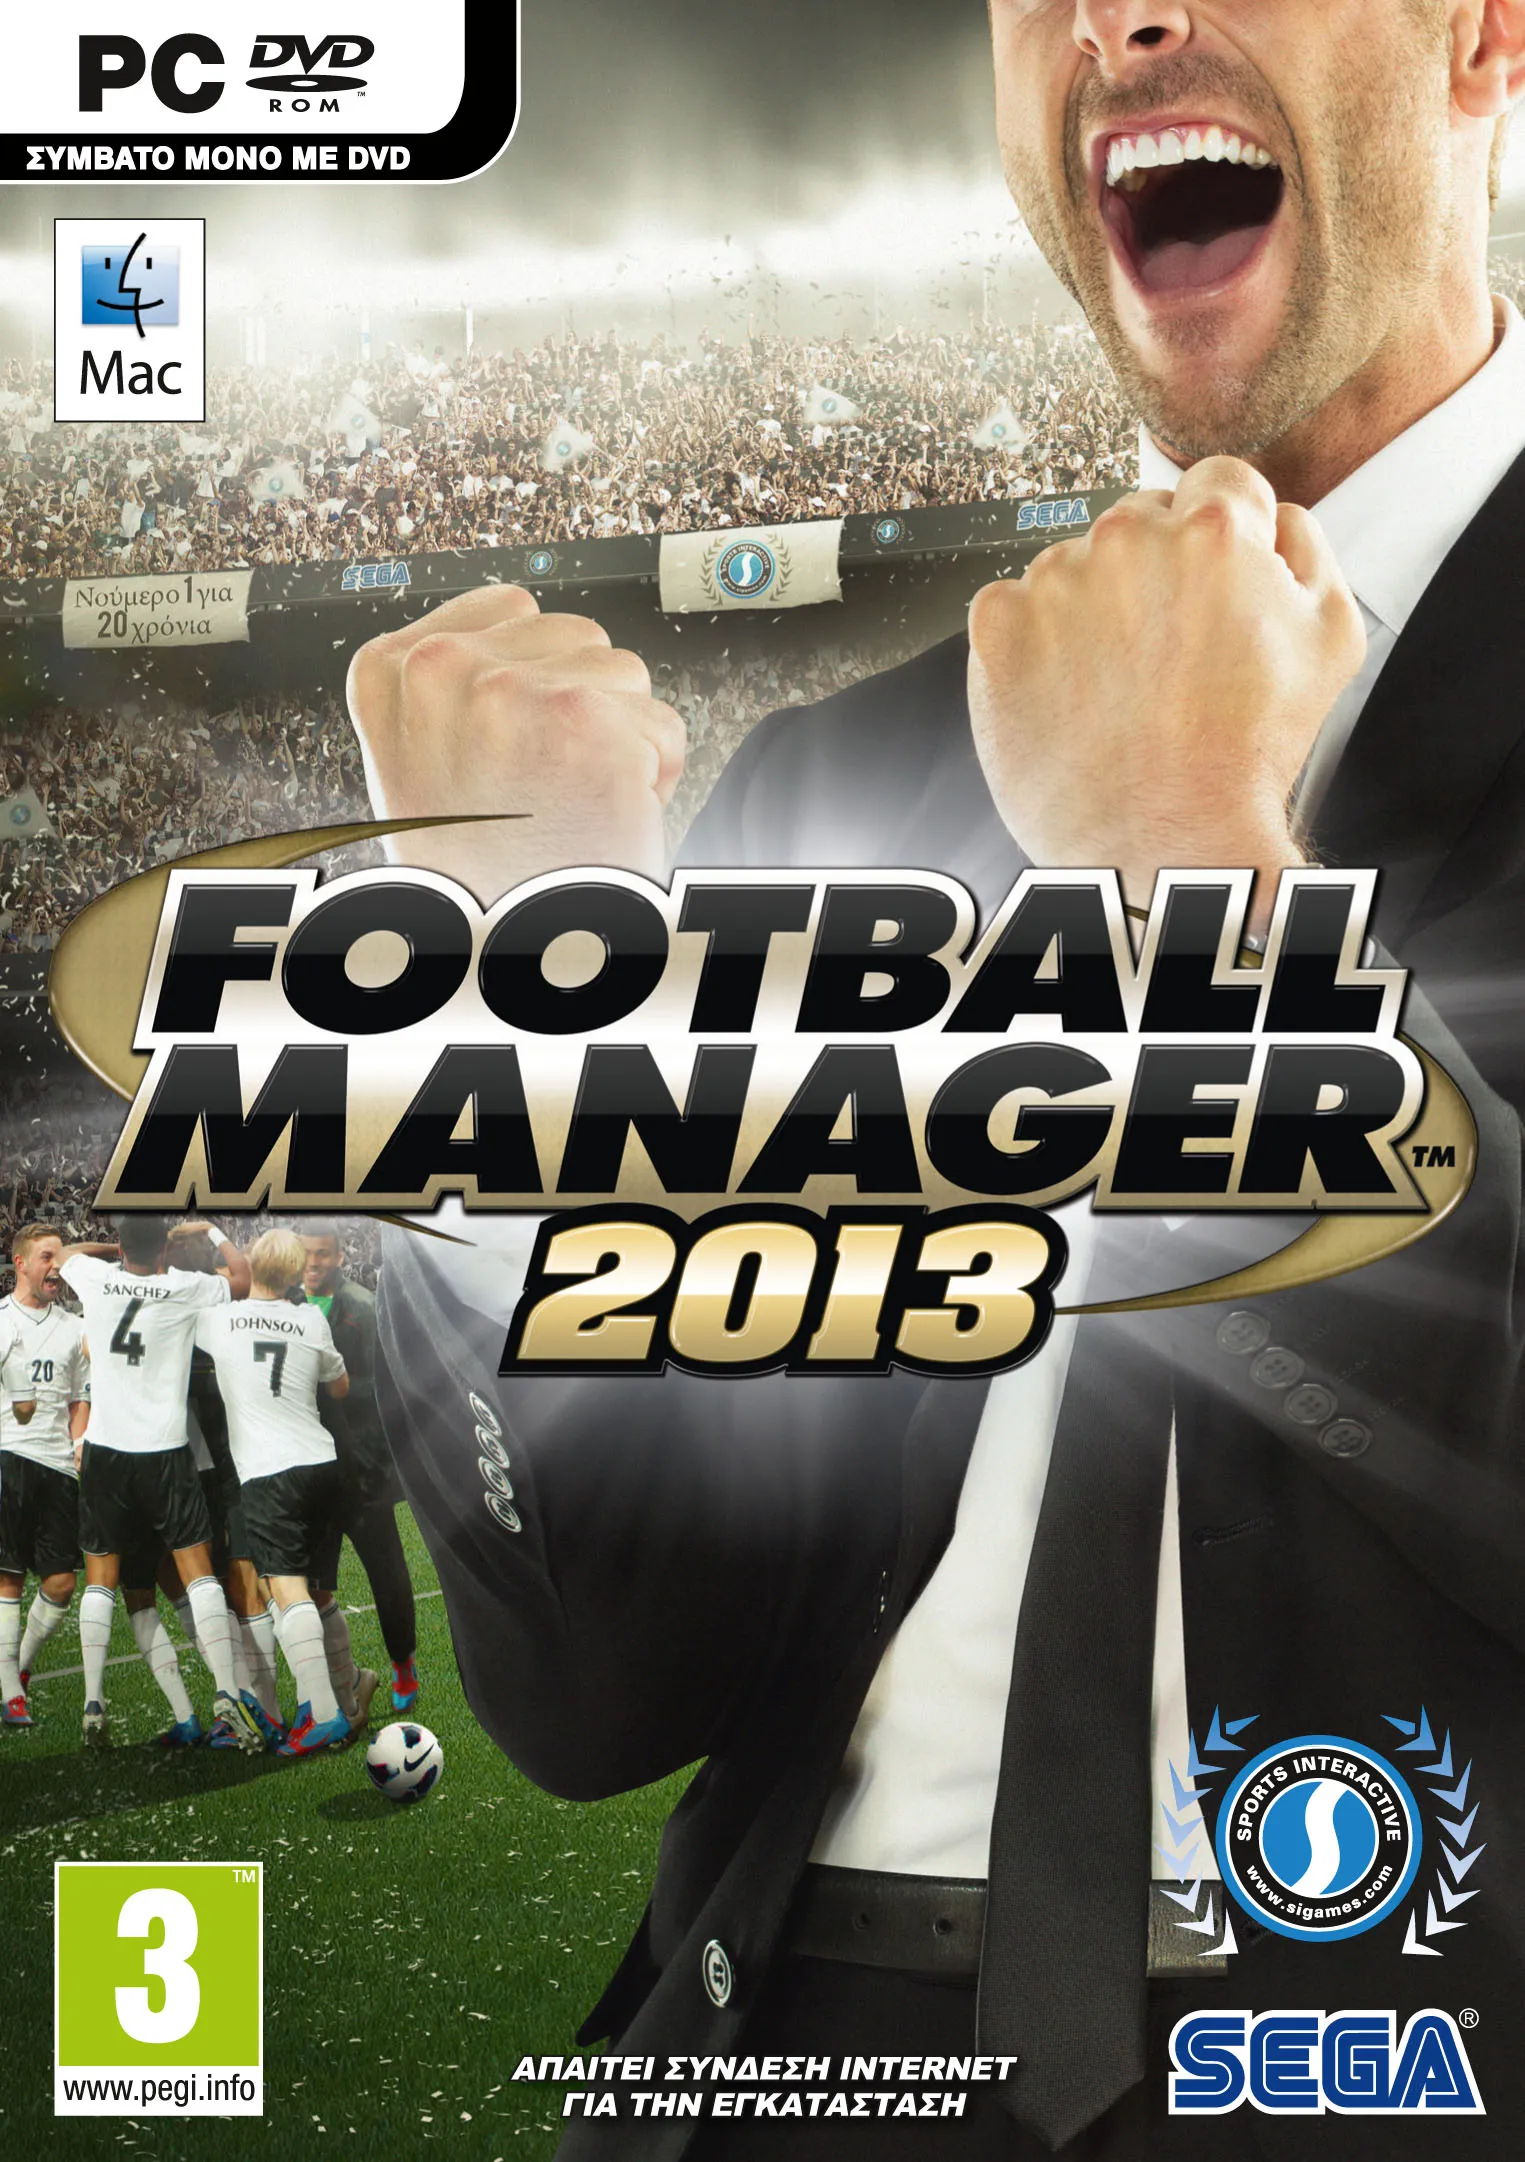 Football Manager 2013 | Κοντά μας στις 2 Νοεμβρίου! 